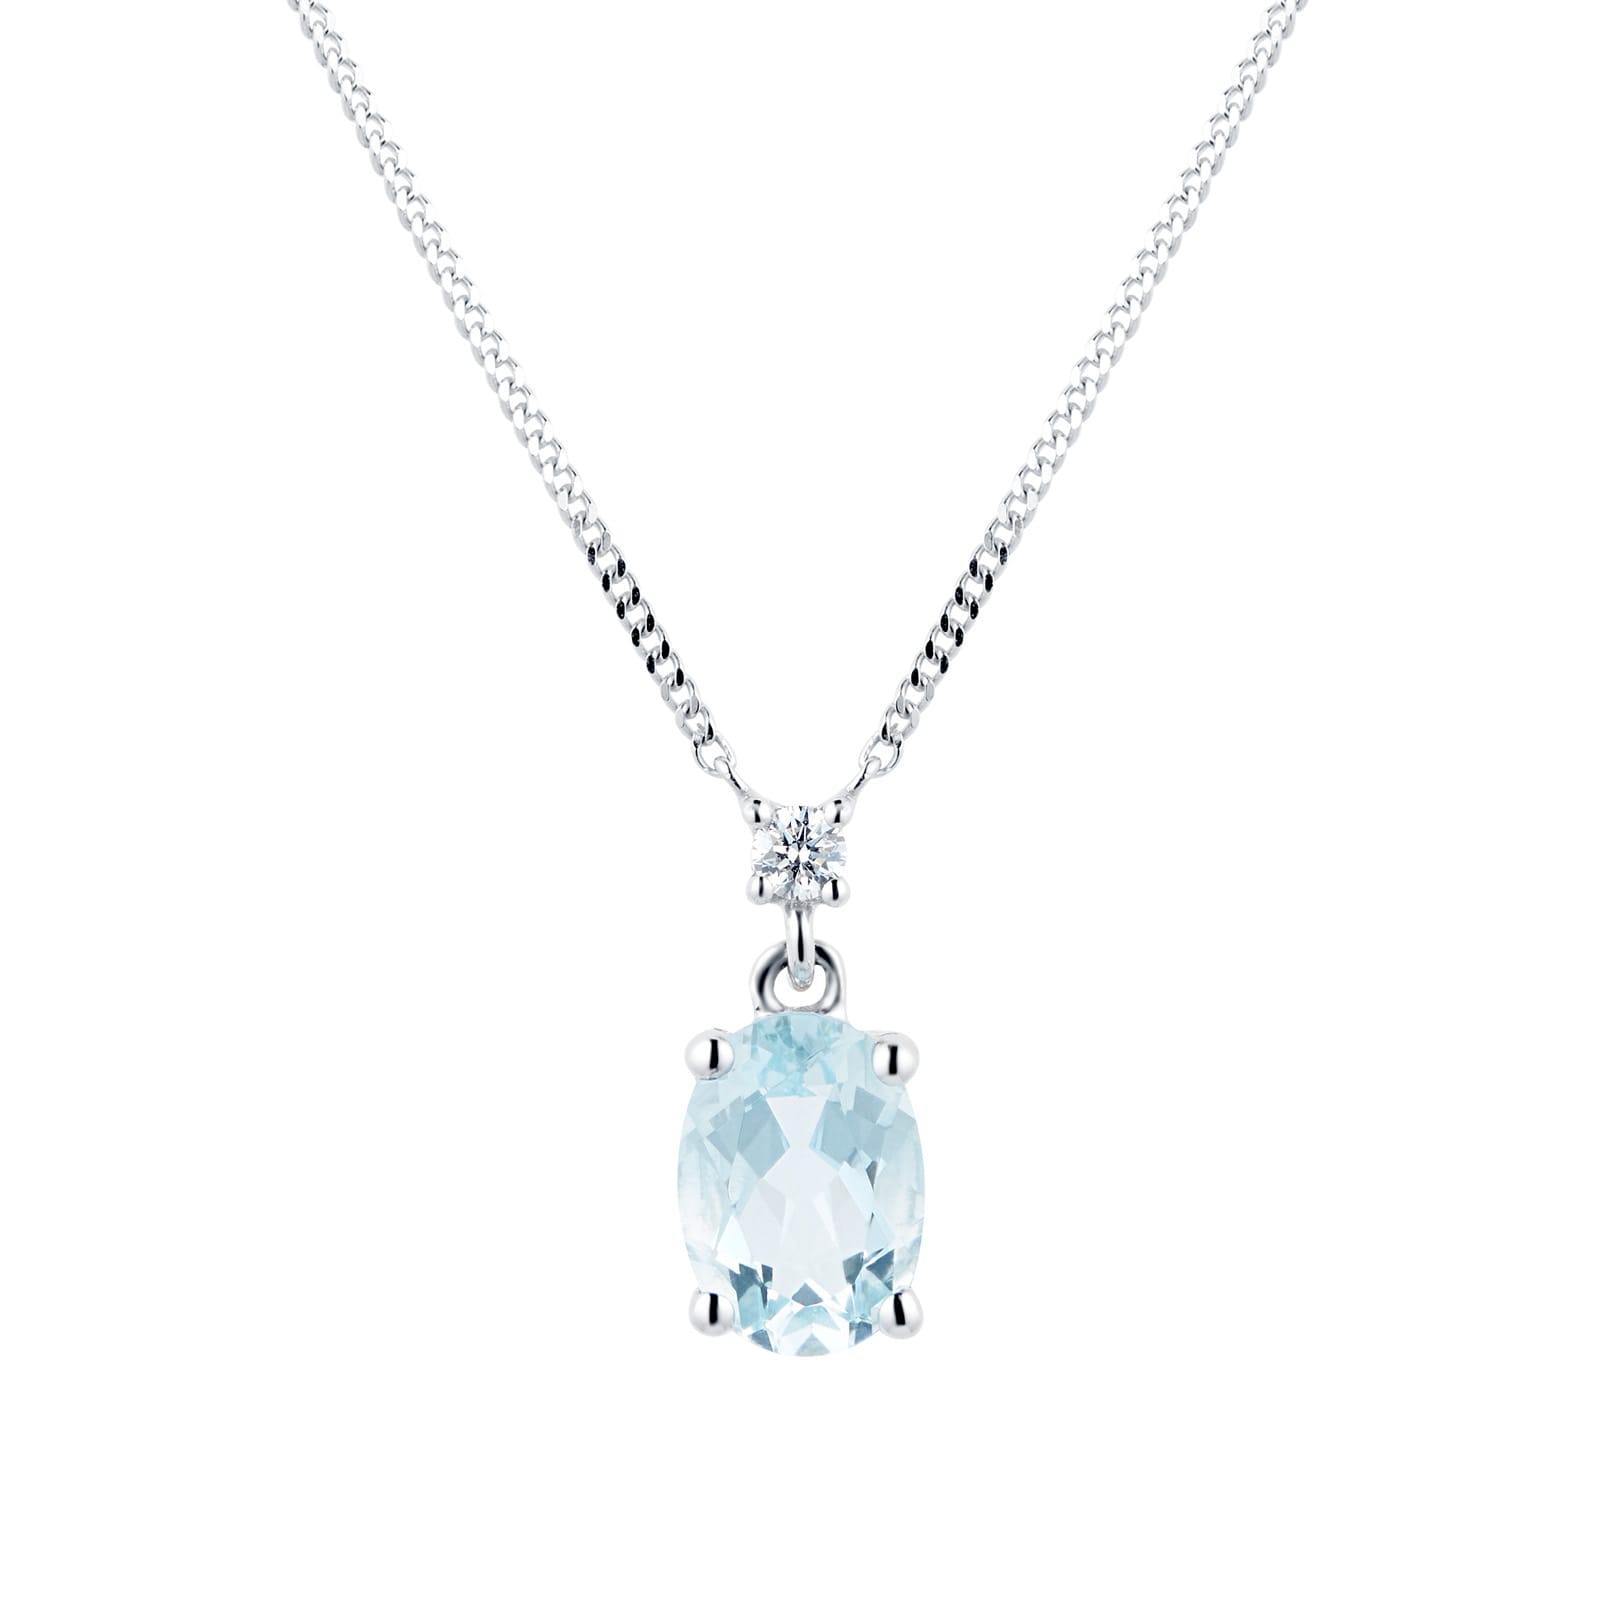 Opalite Opal Gemstone Bracelet Gift for Him & Her Opal Jewelry, Opal Stone,  Mens Beaded Bracelet Gift, Gifts Bracelets for WomenChristmas